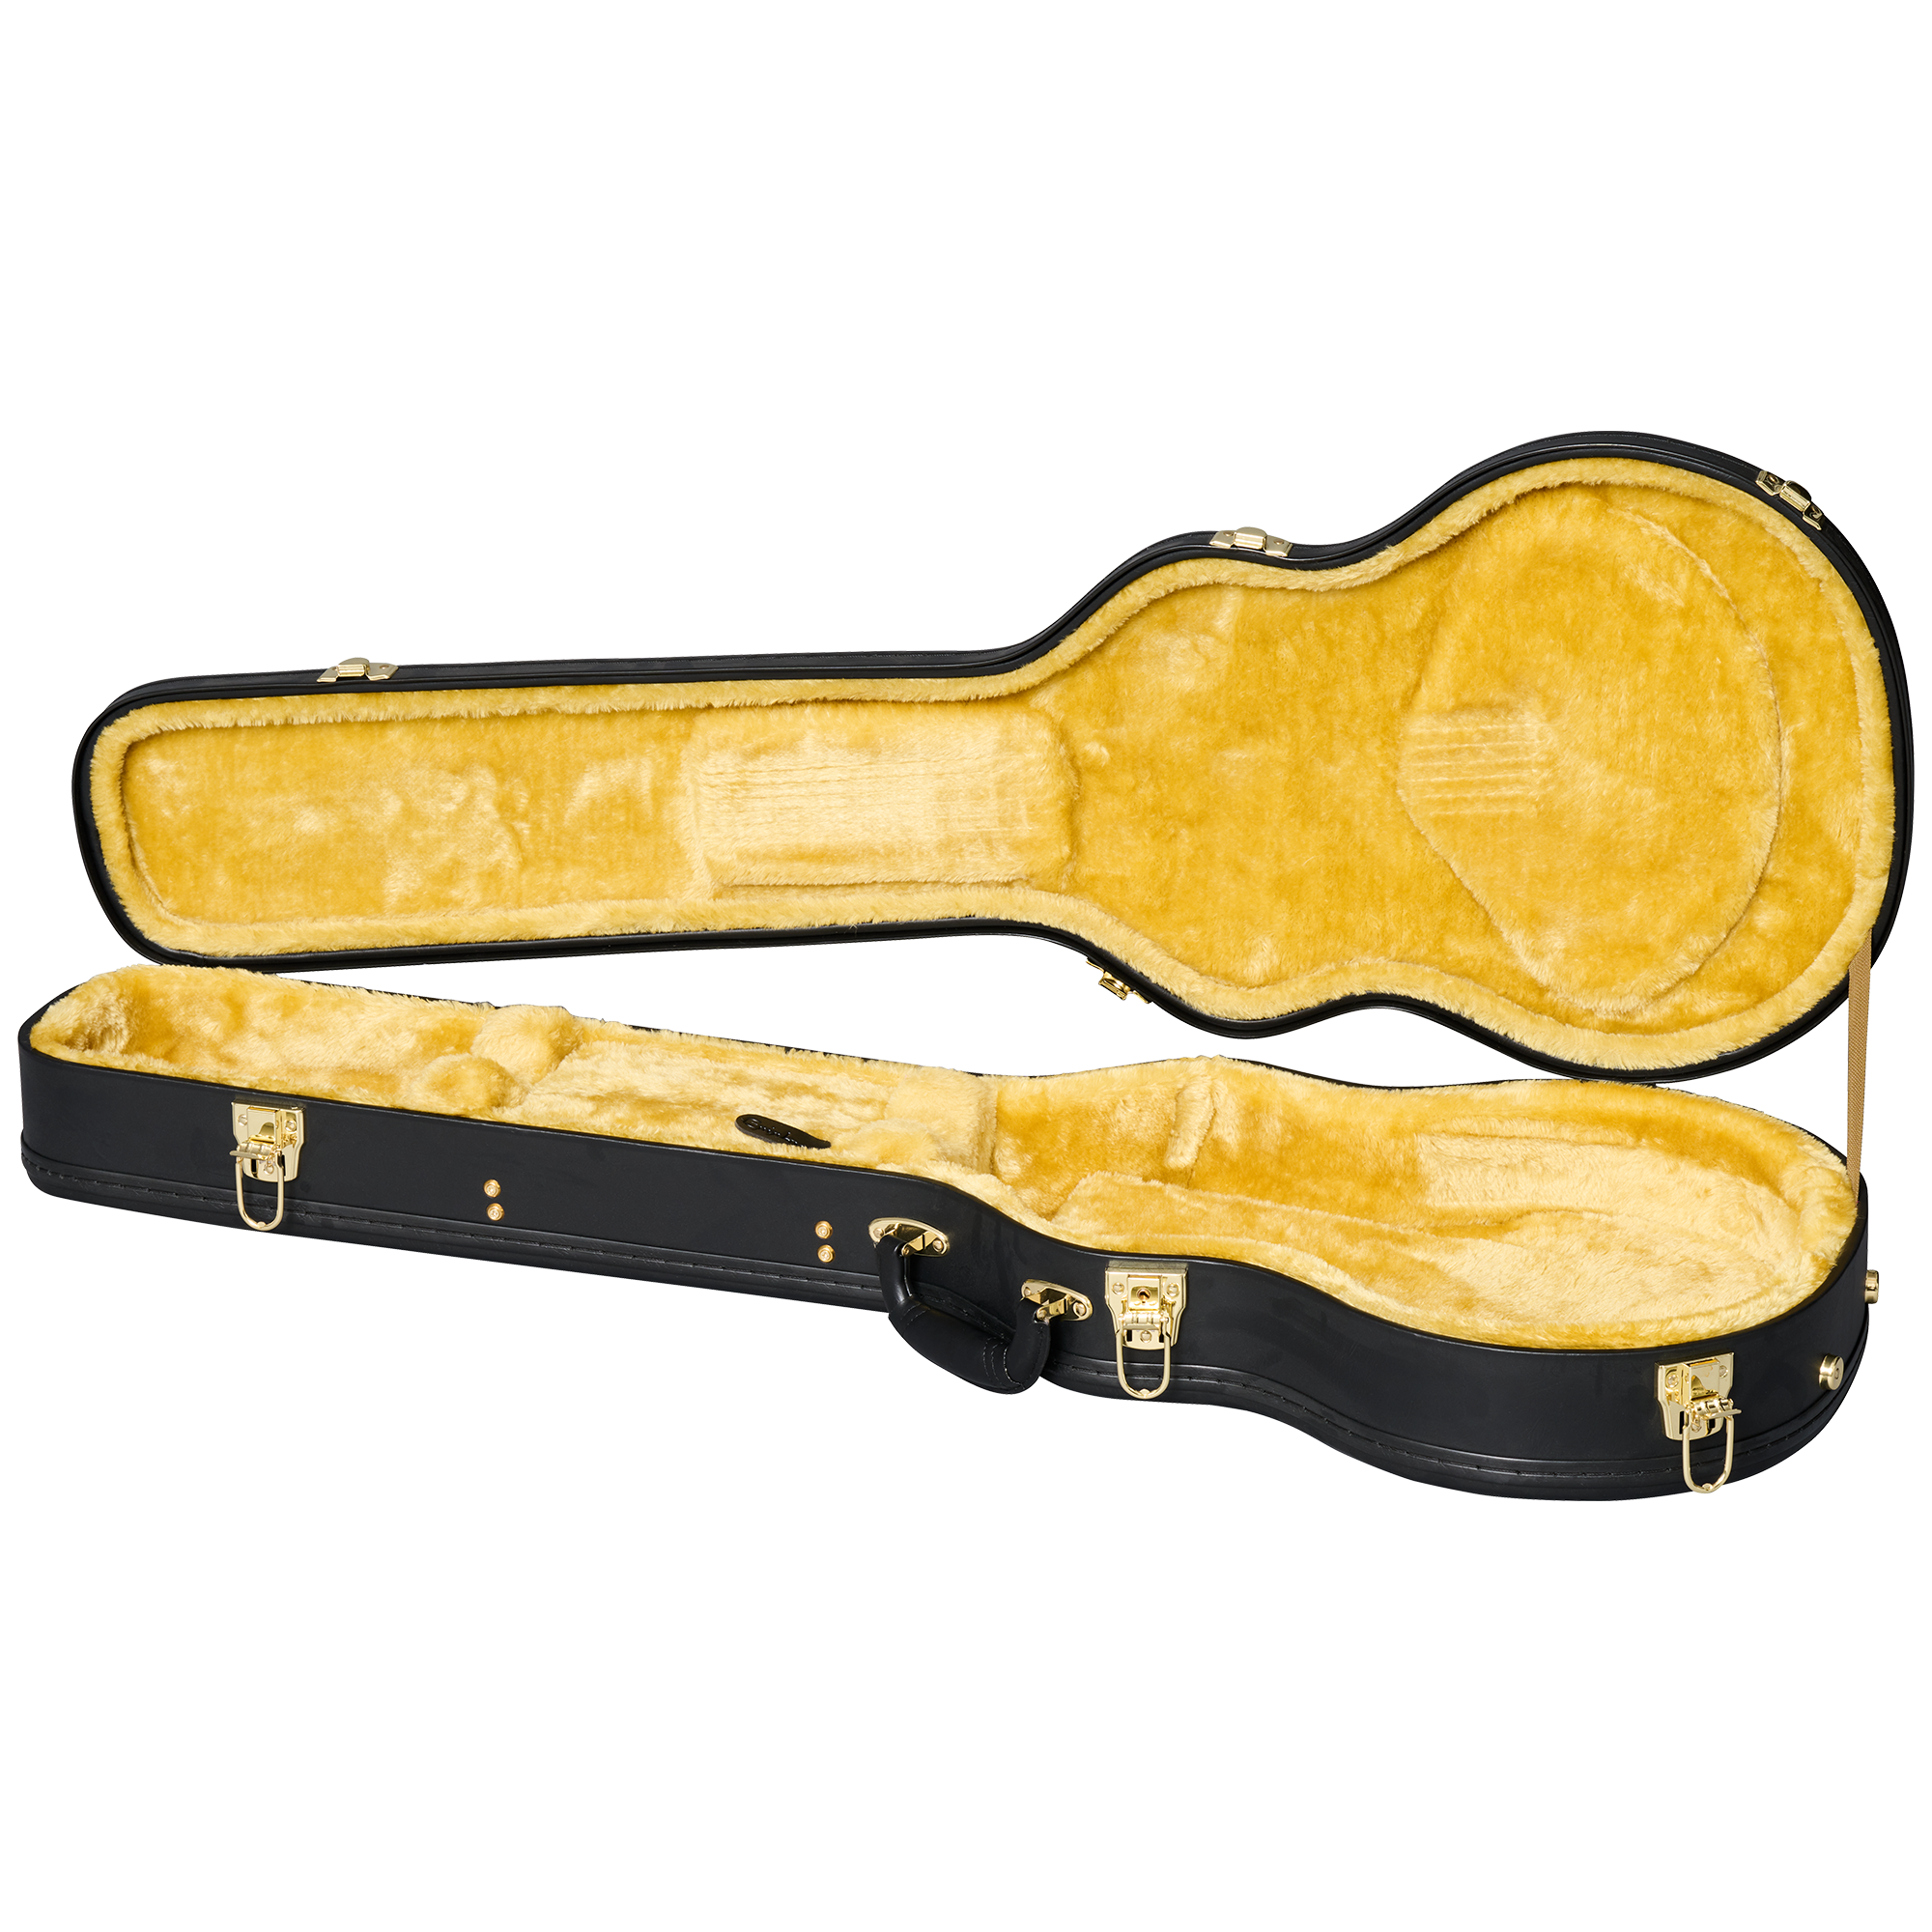 Epiphone ( GIBSON HEADSTOCK ) Les Paul Custom Electric Guitar with Case - Ebony ECLPCEBGH